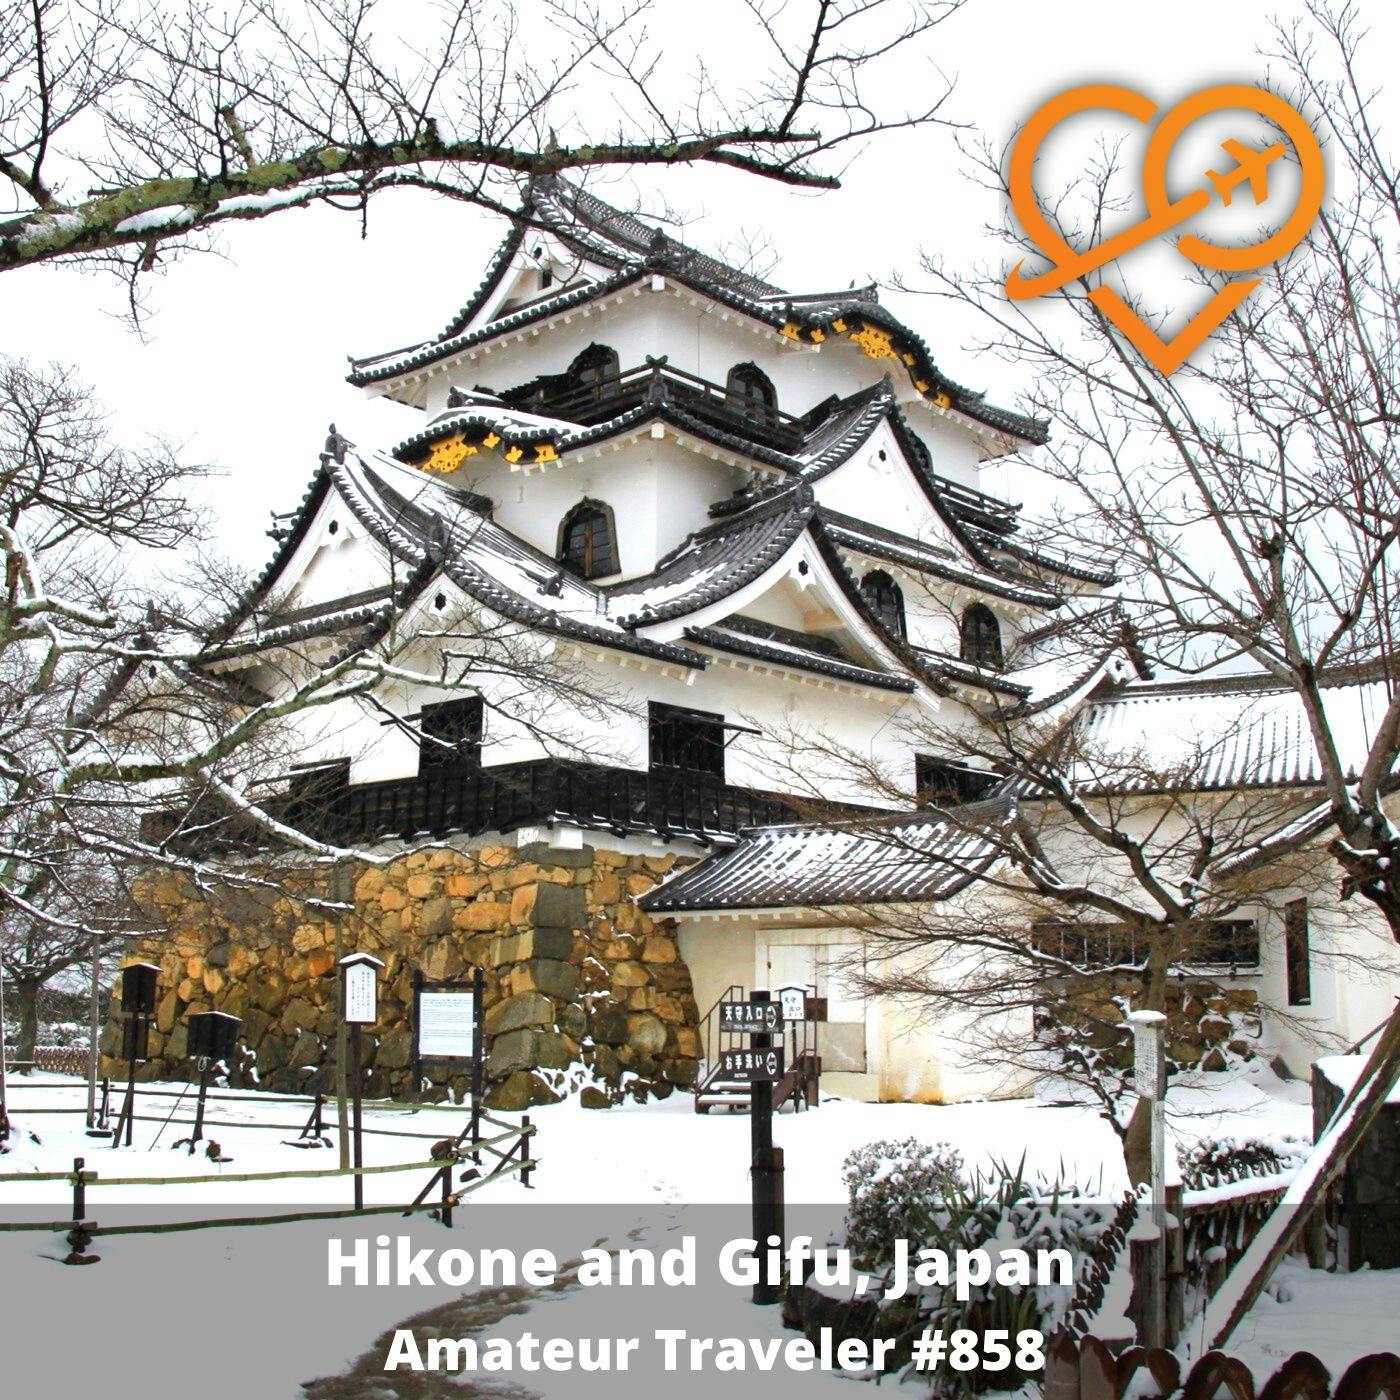 AT#858 - Travel to Hikone and Gifu, Japan